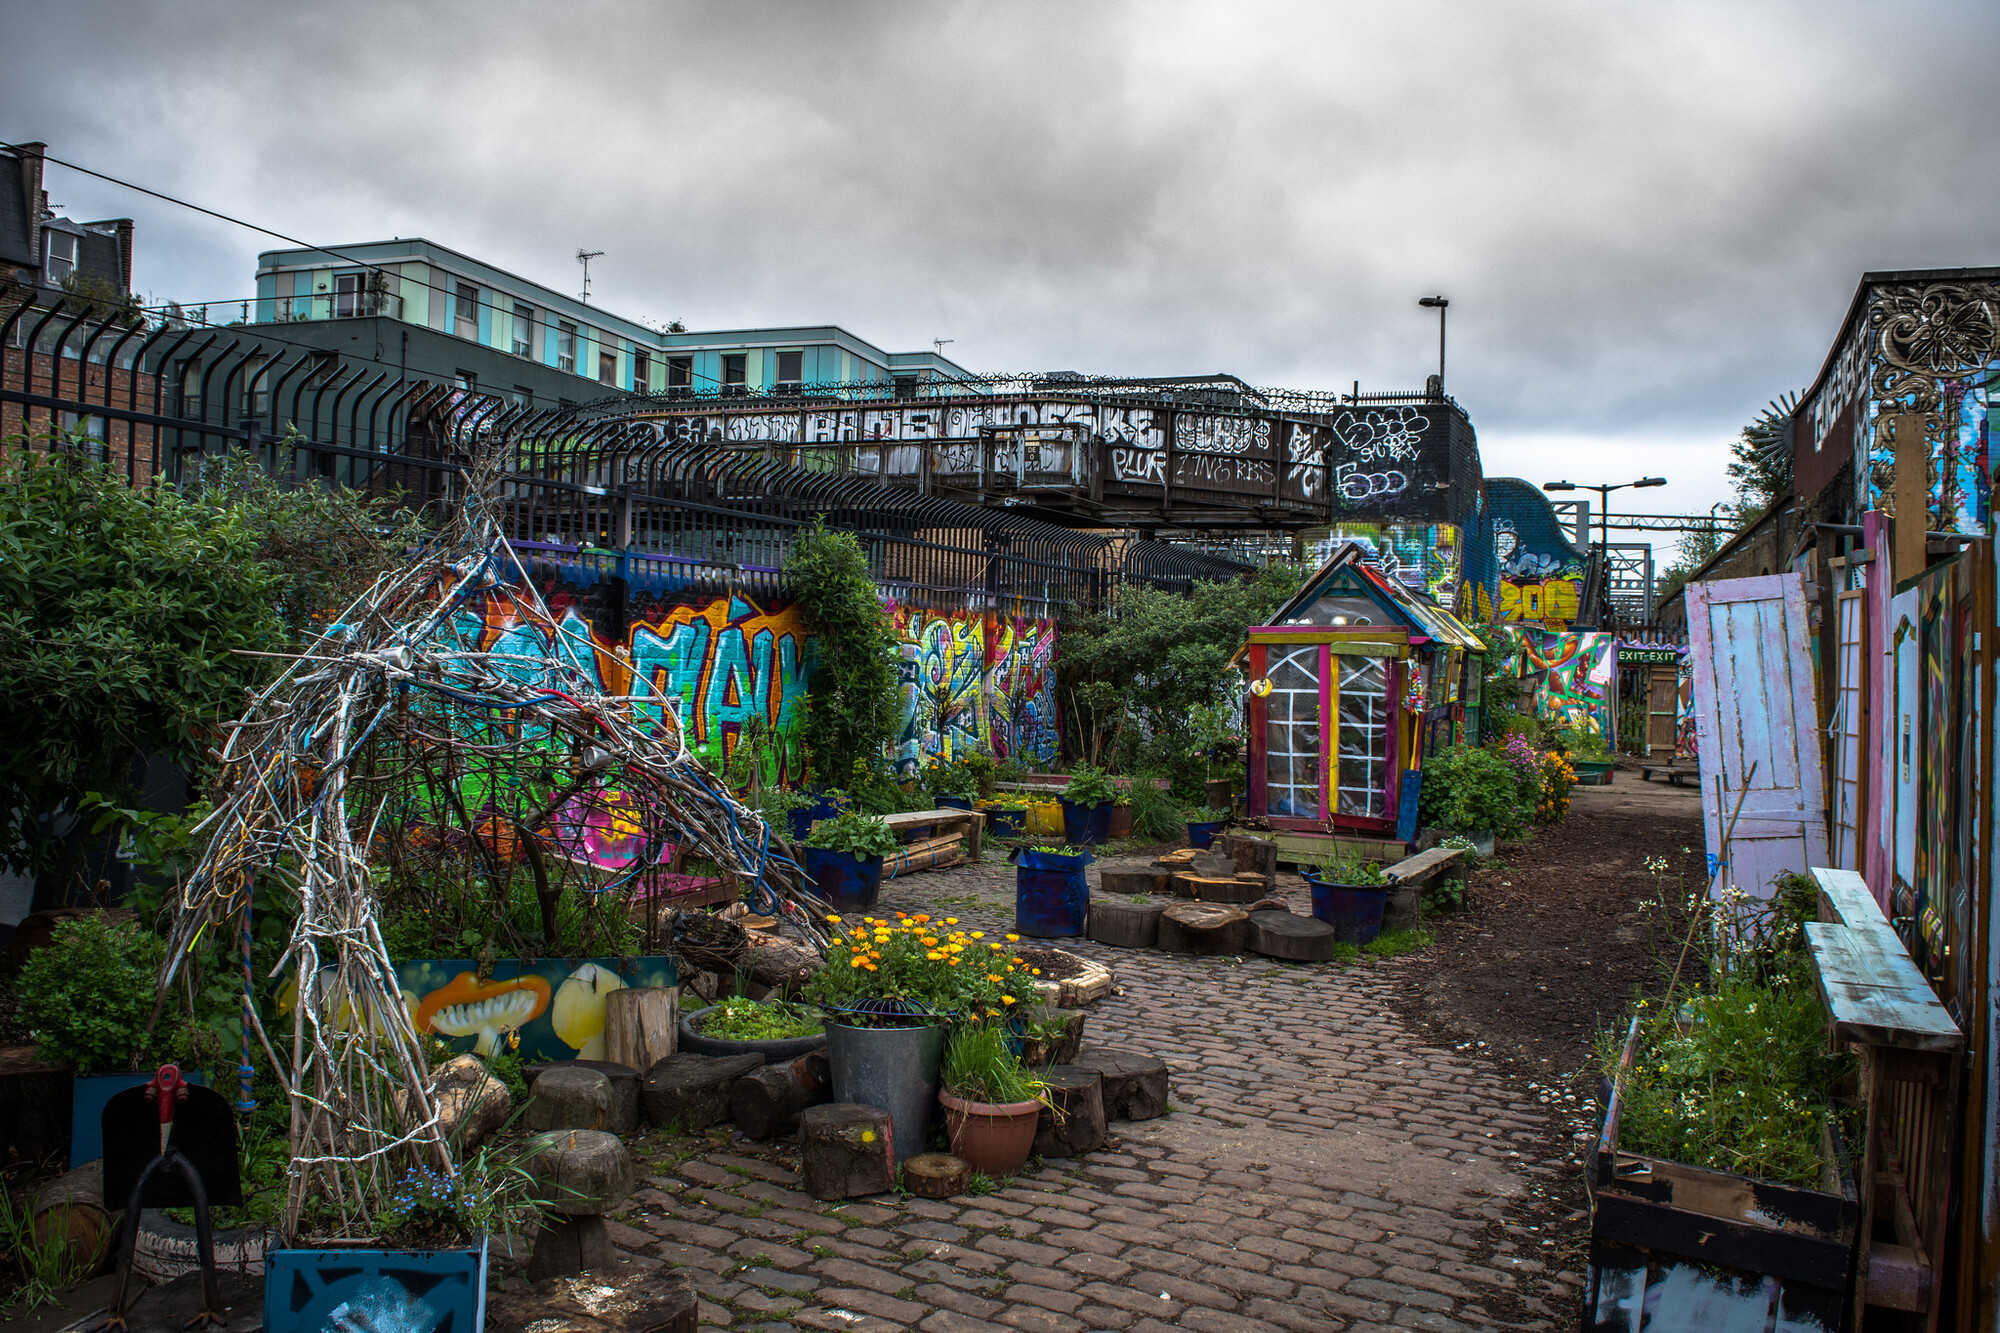 colorful community garden with graffiti on brick walls